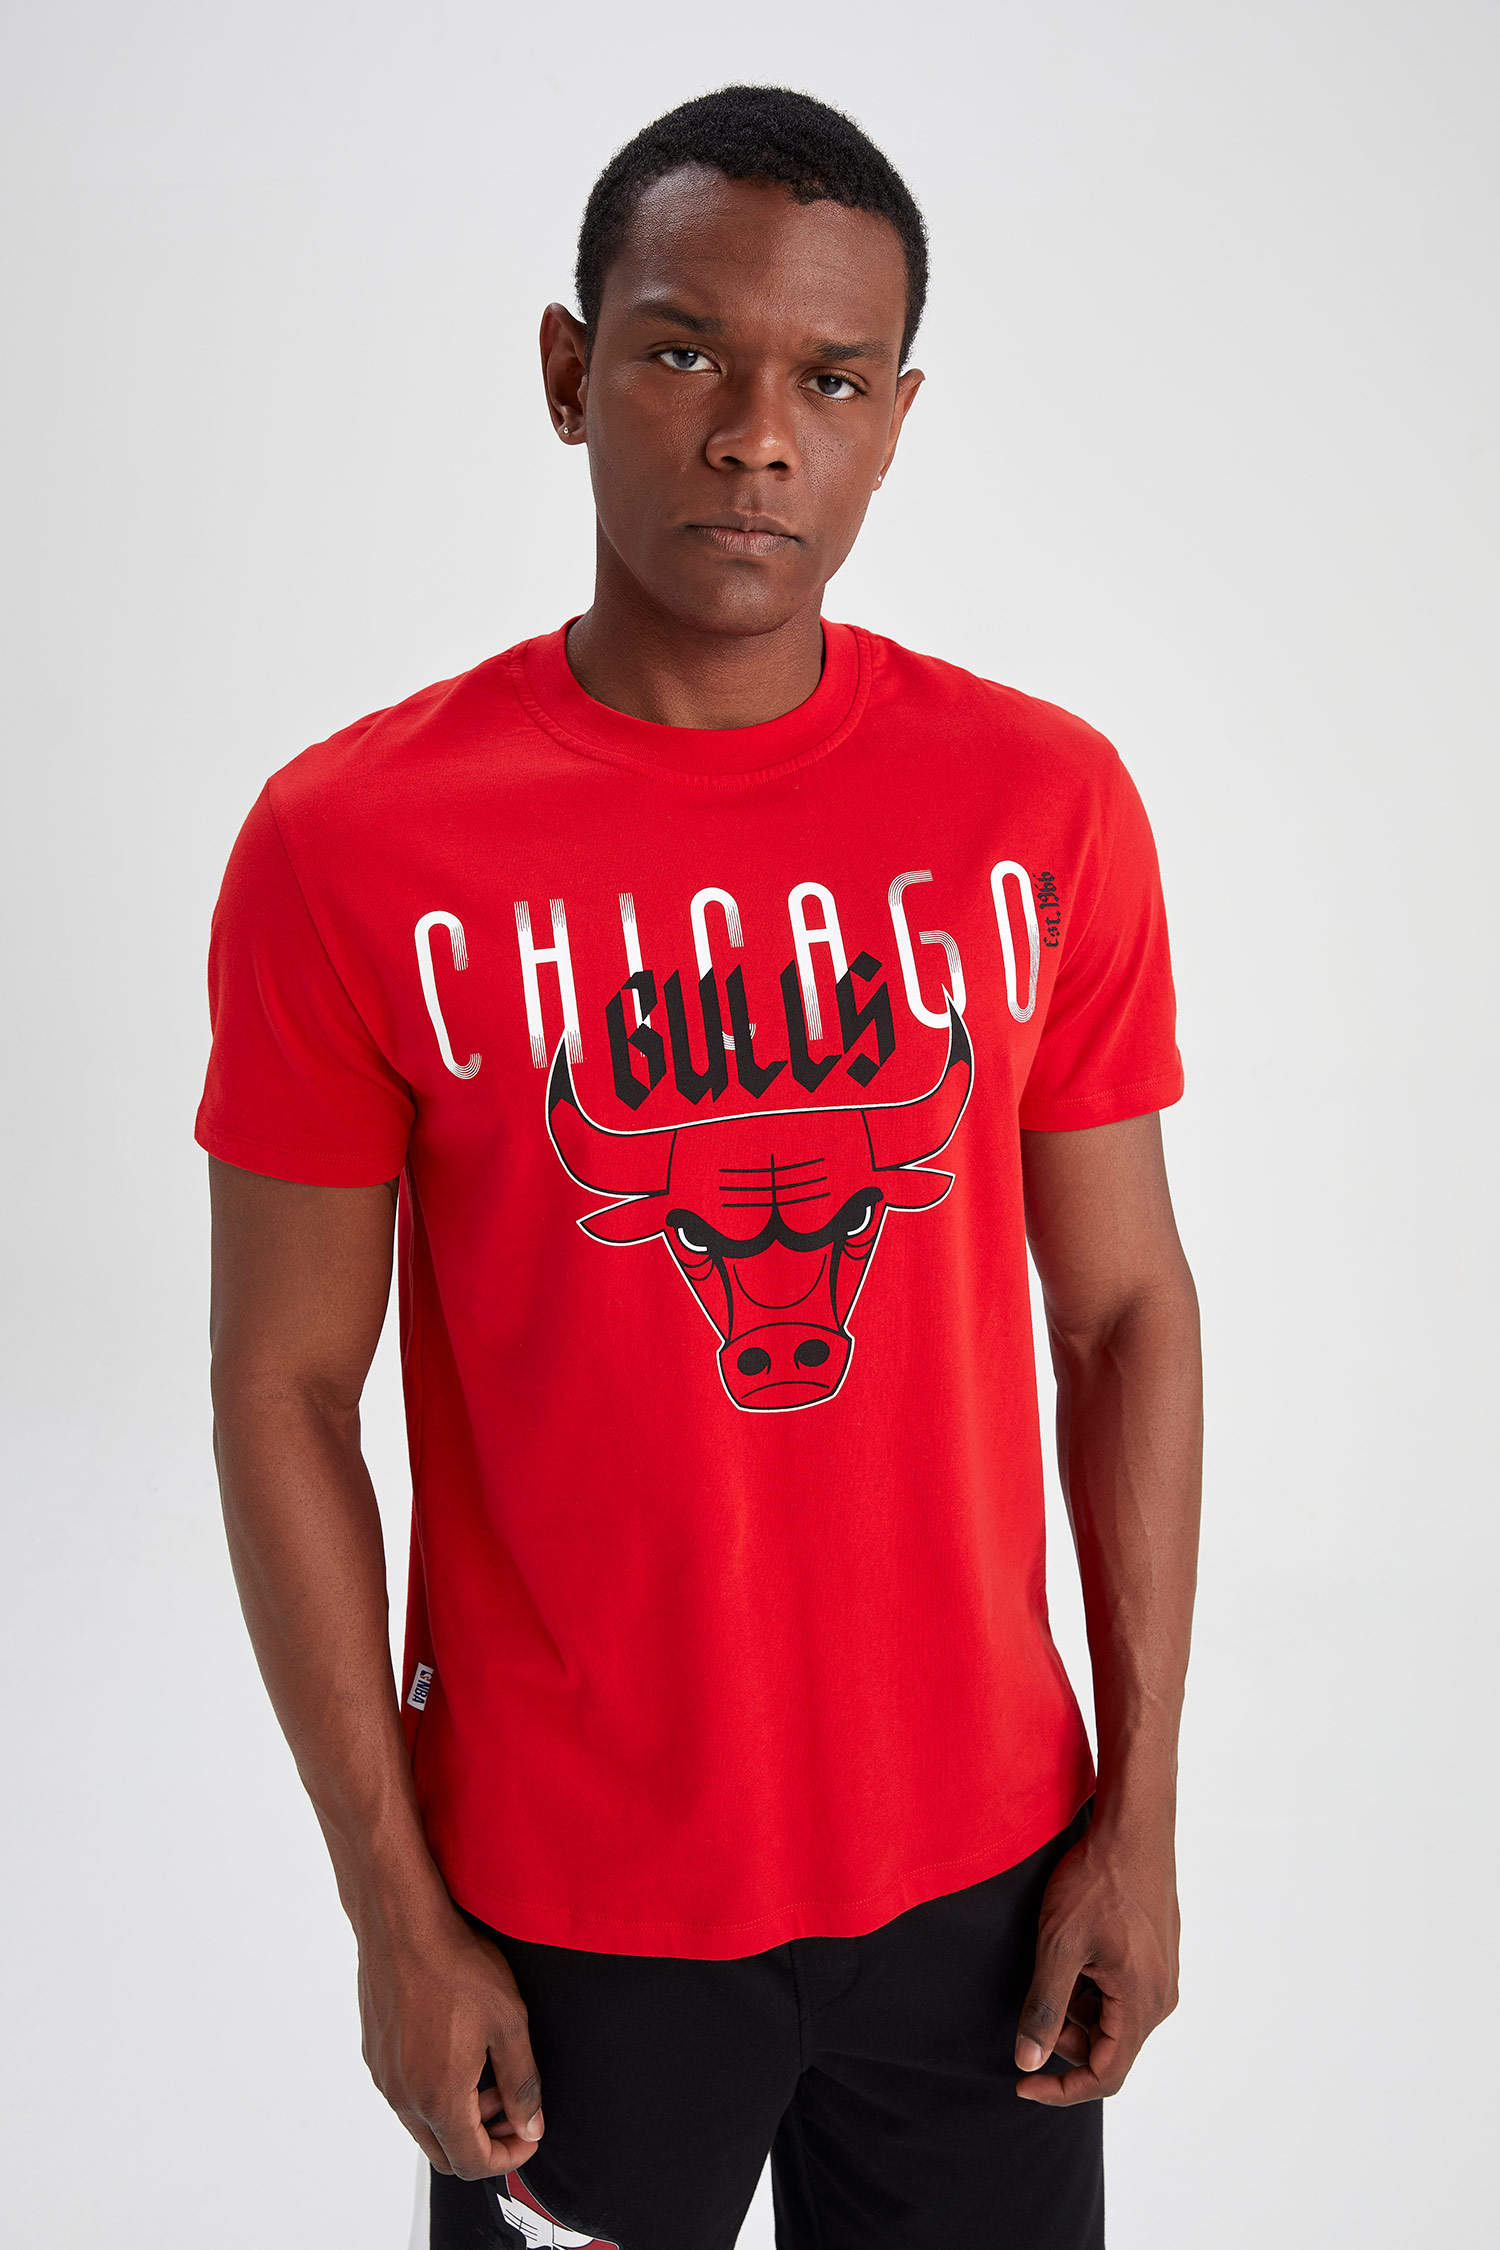 Chicago Bulls NBA Youth Nike Dri-Fit Longsleeve Practice Shirt -Black